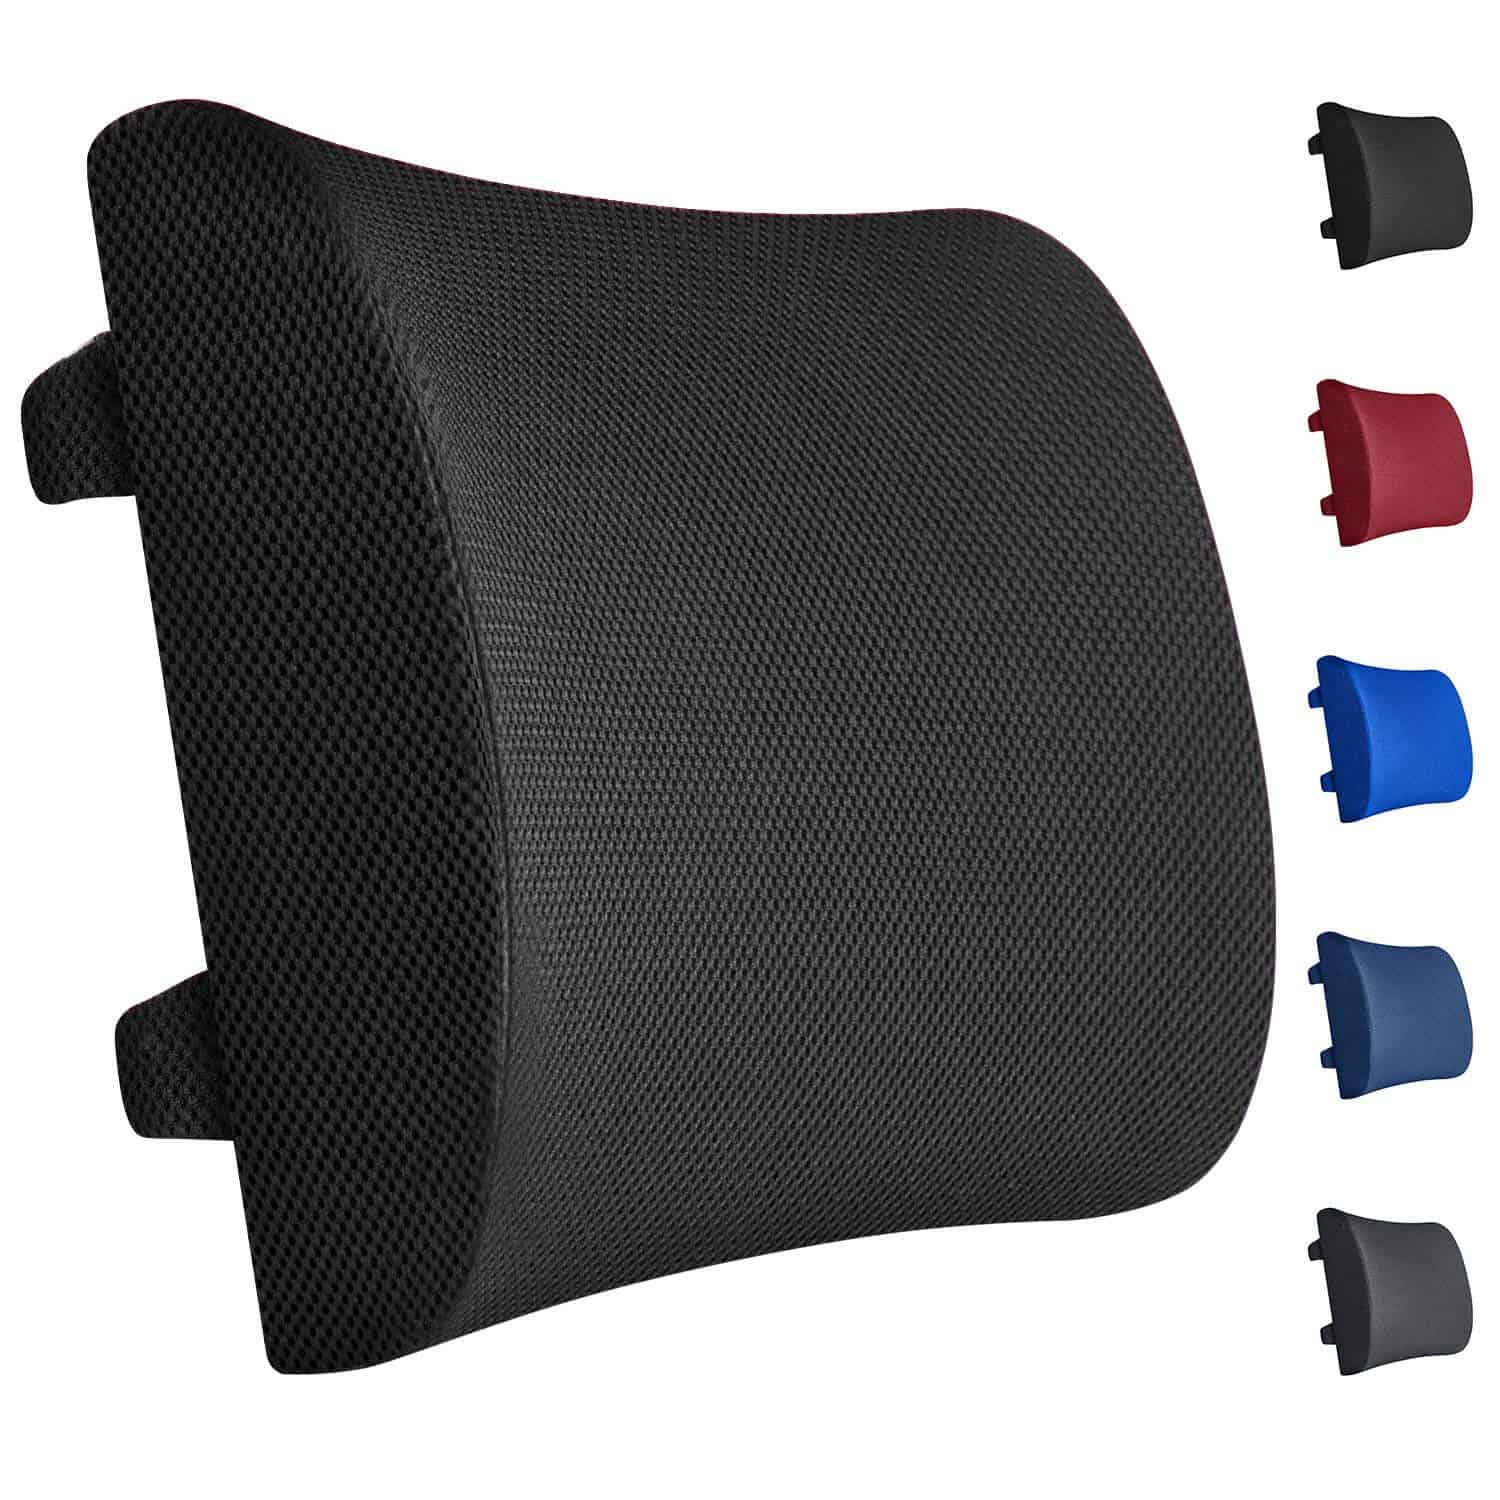 Lumbar support for car: Everlasting Comfort 100% Pure Memory Foam Back Cushion